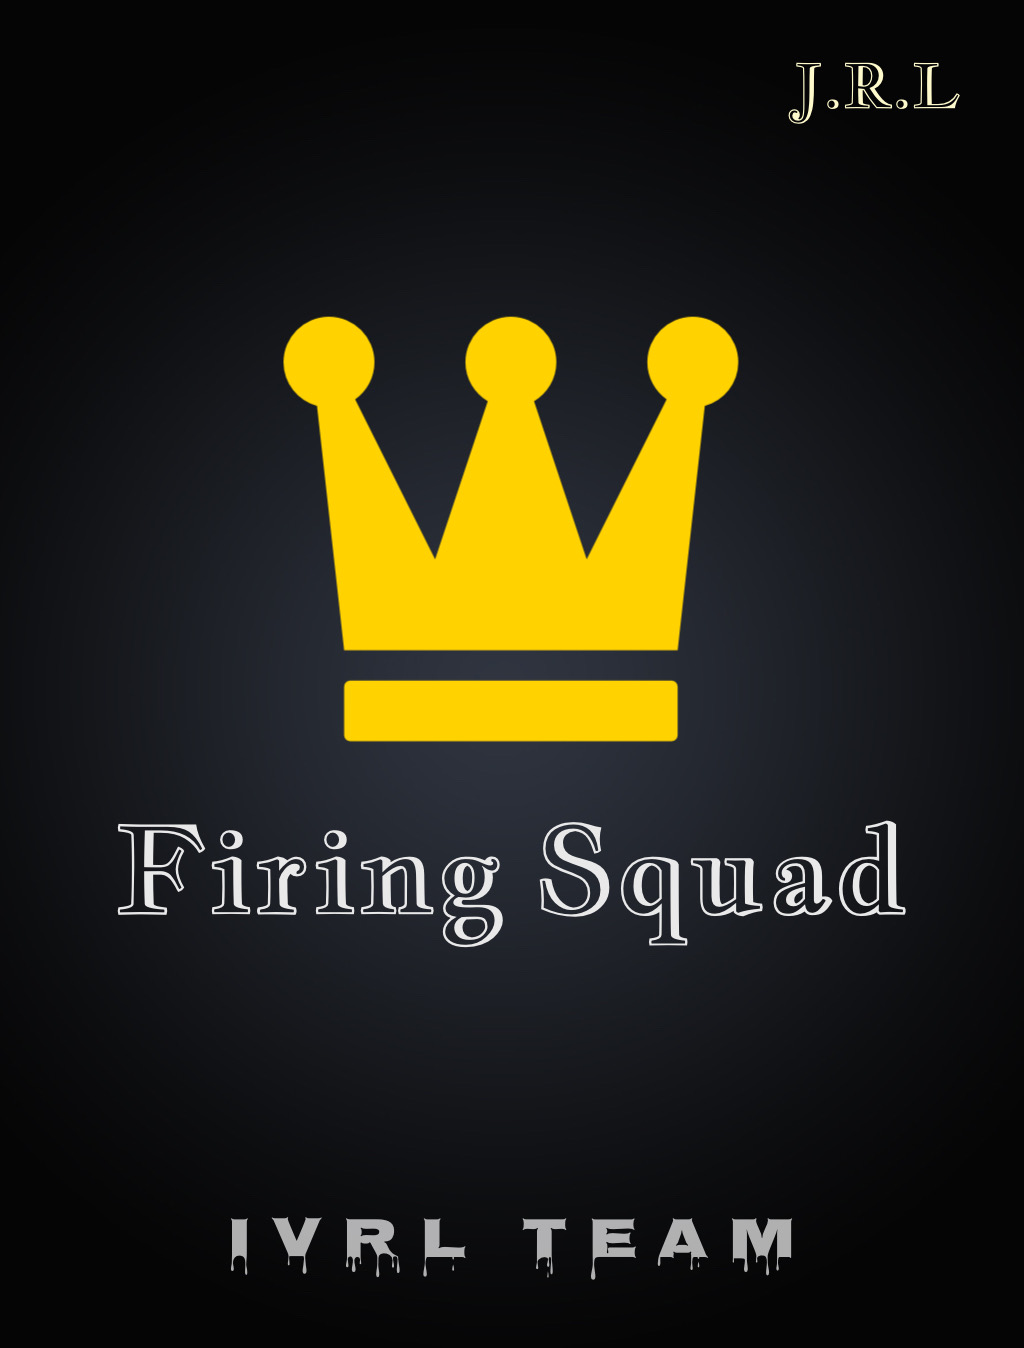 Firing squad logo